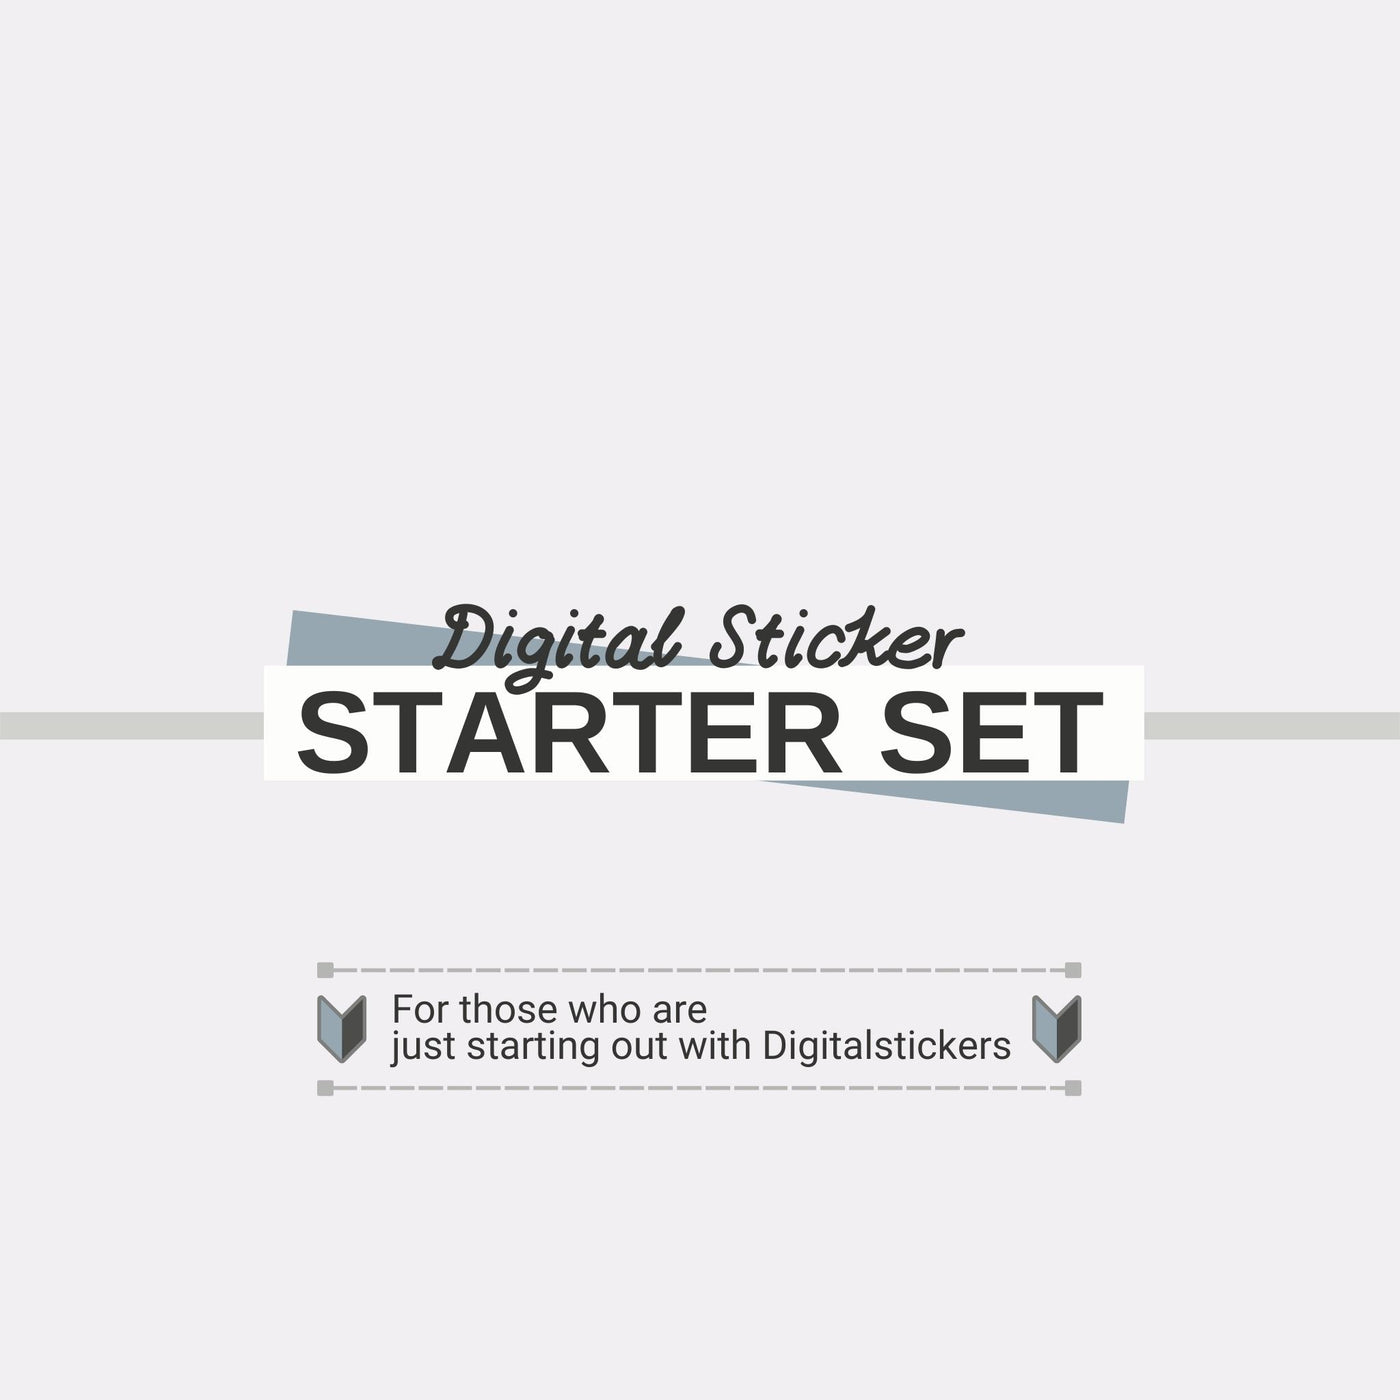 StarterSet / Digital Sticker